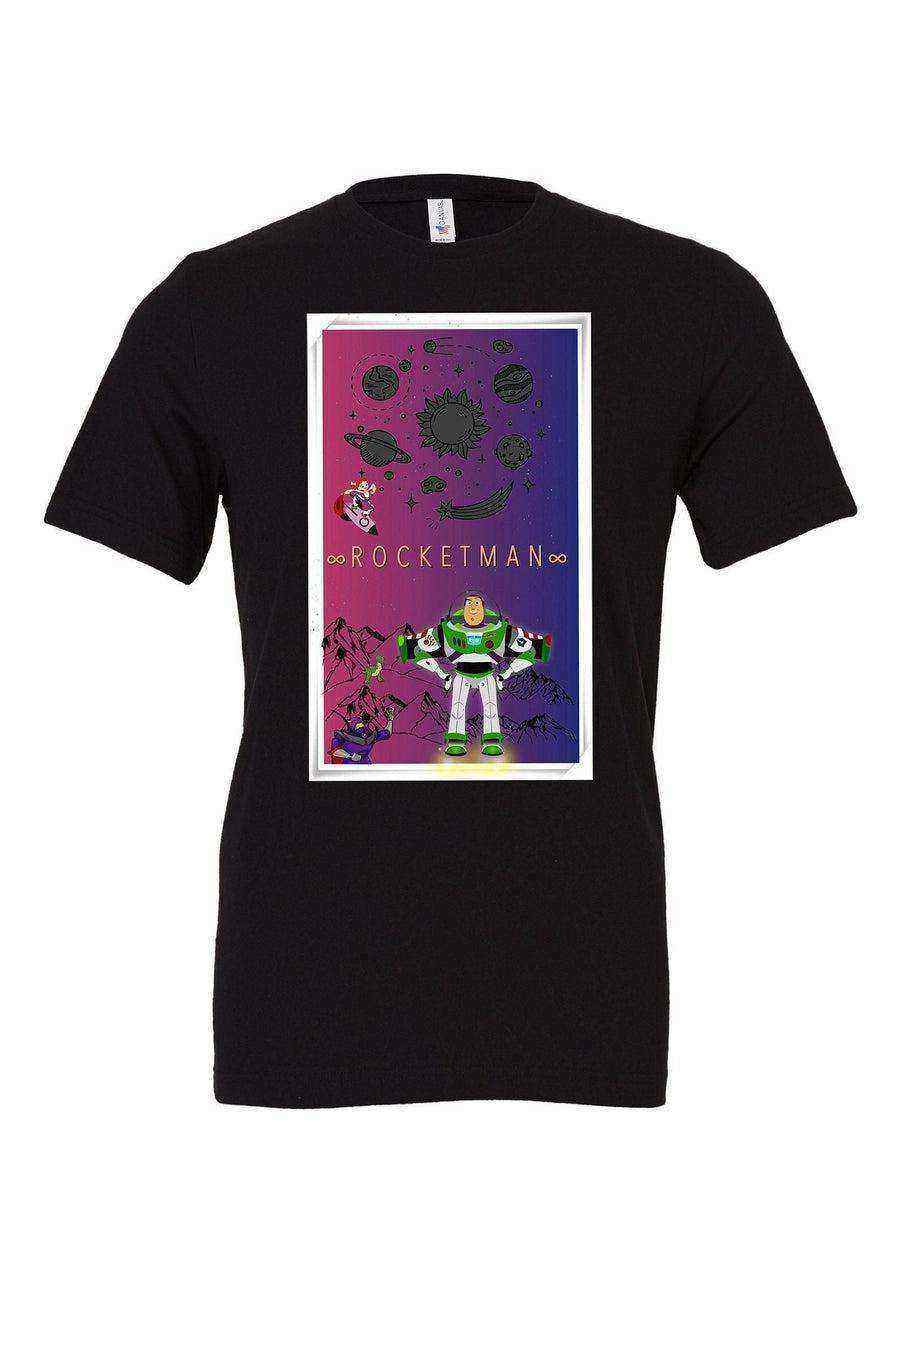 Buzz Rocketman Shirt | Buzz Lightyear Shirt | Music Mashup Tee - Dylan's Tees